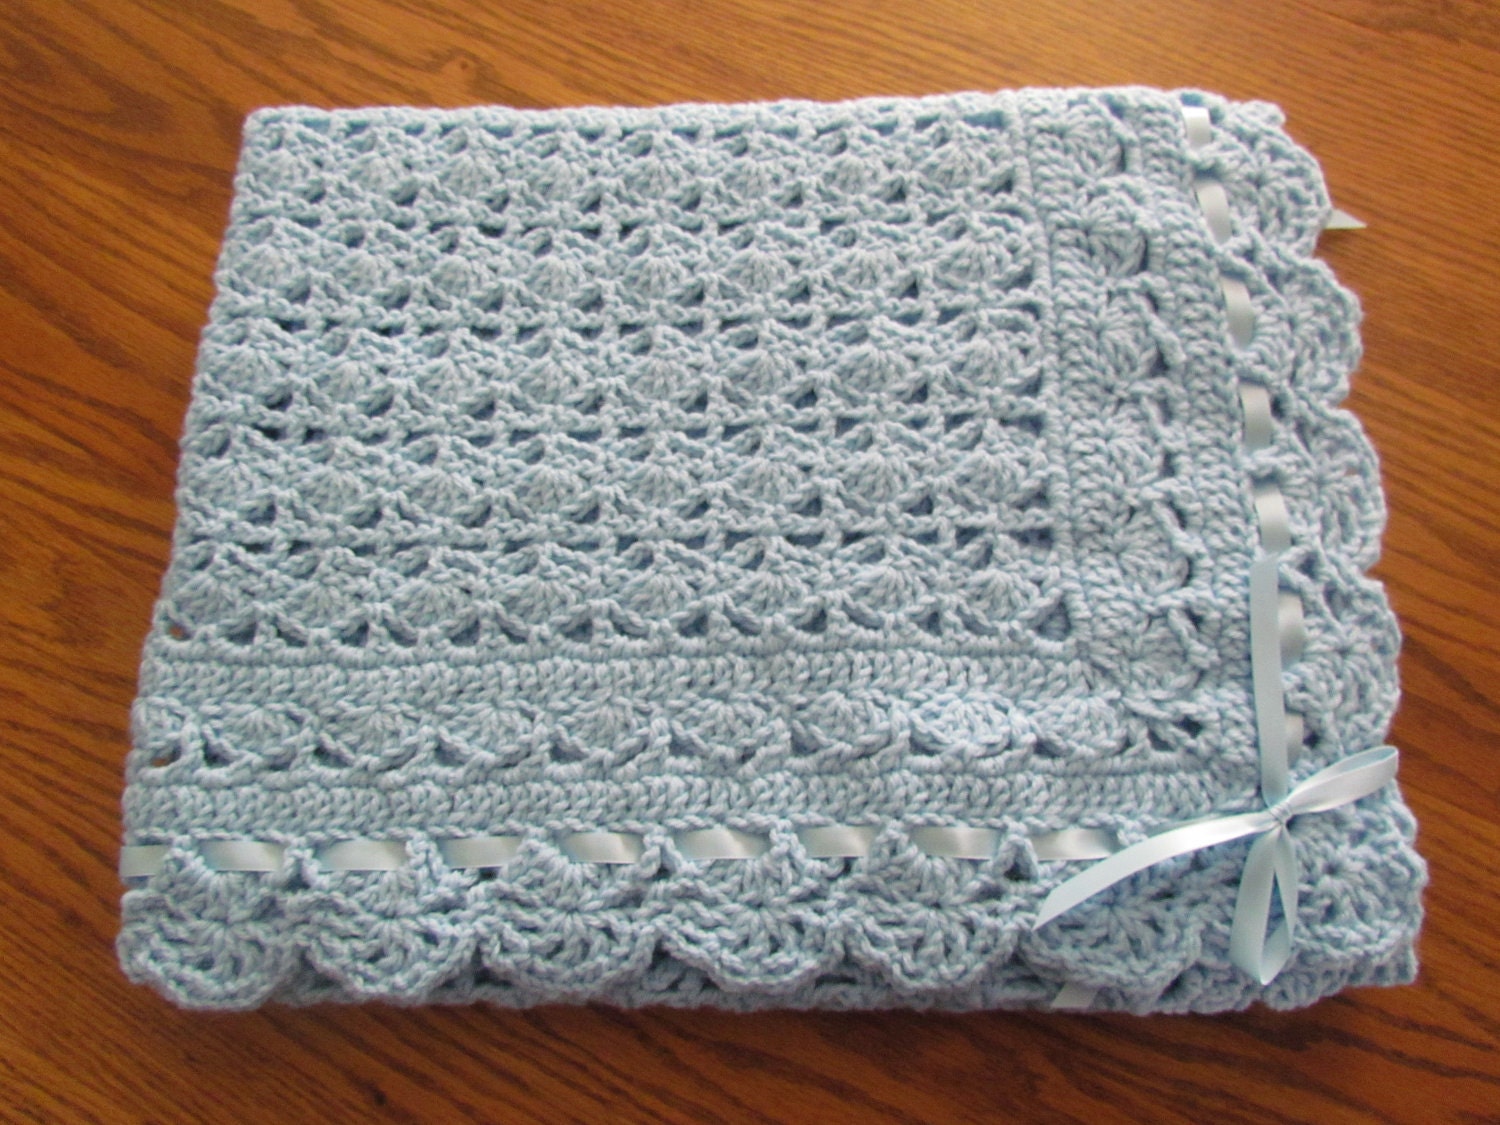 BLANKET CHRISTENING CROCHET PATTERN – Crochet Patterns